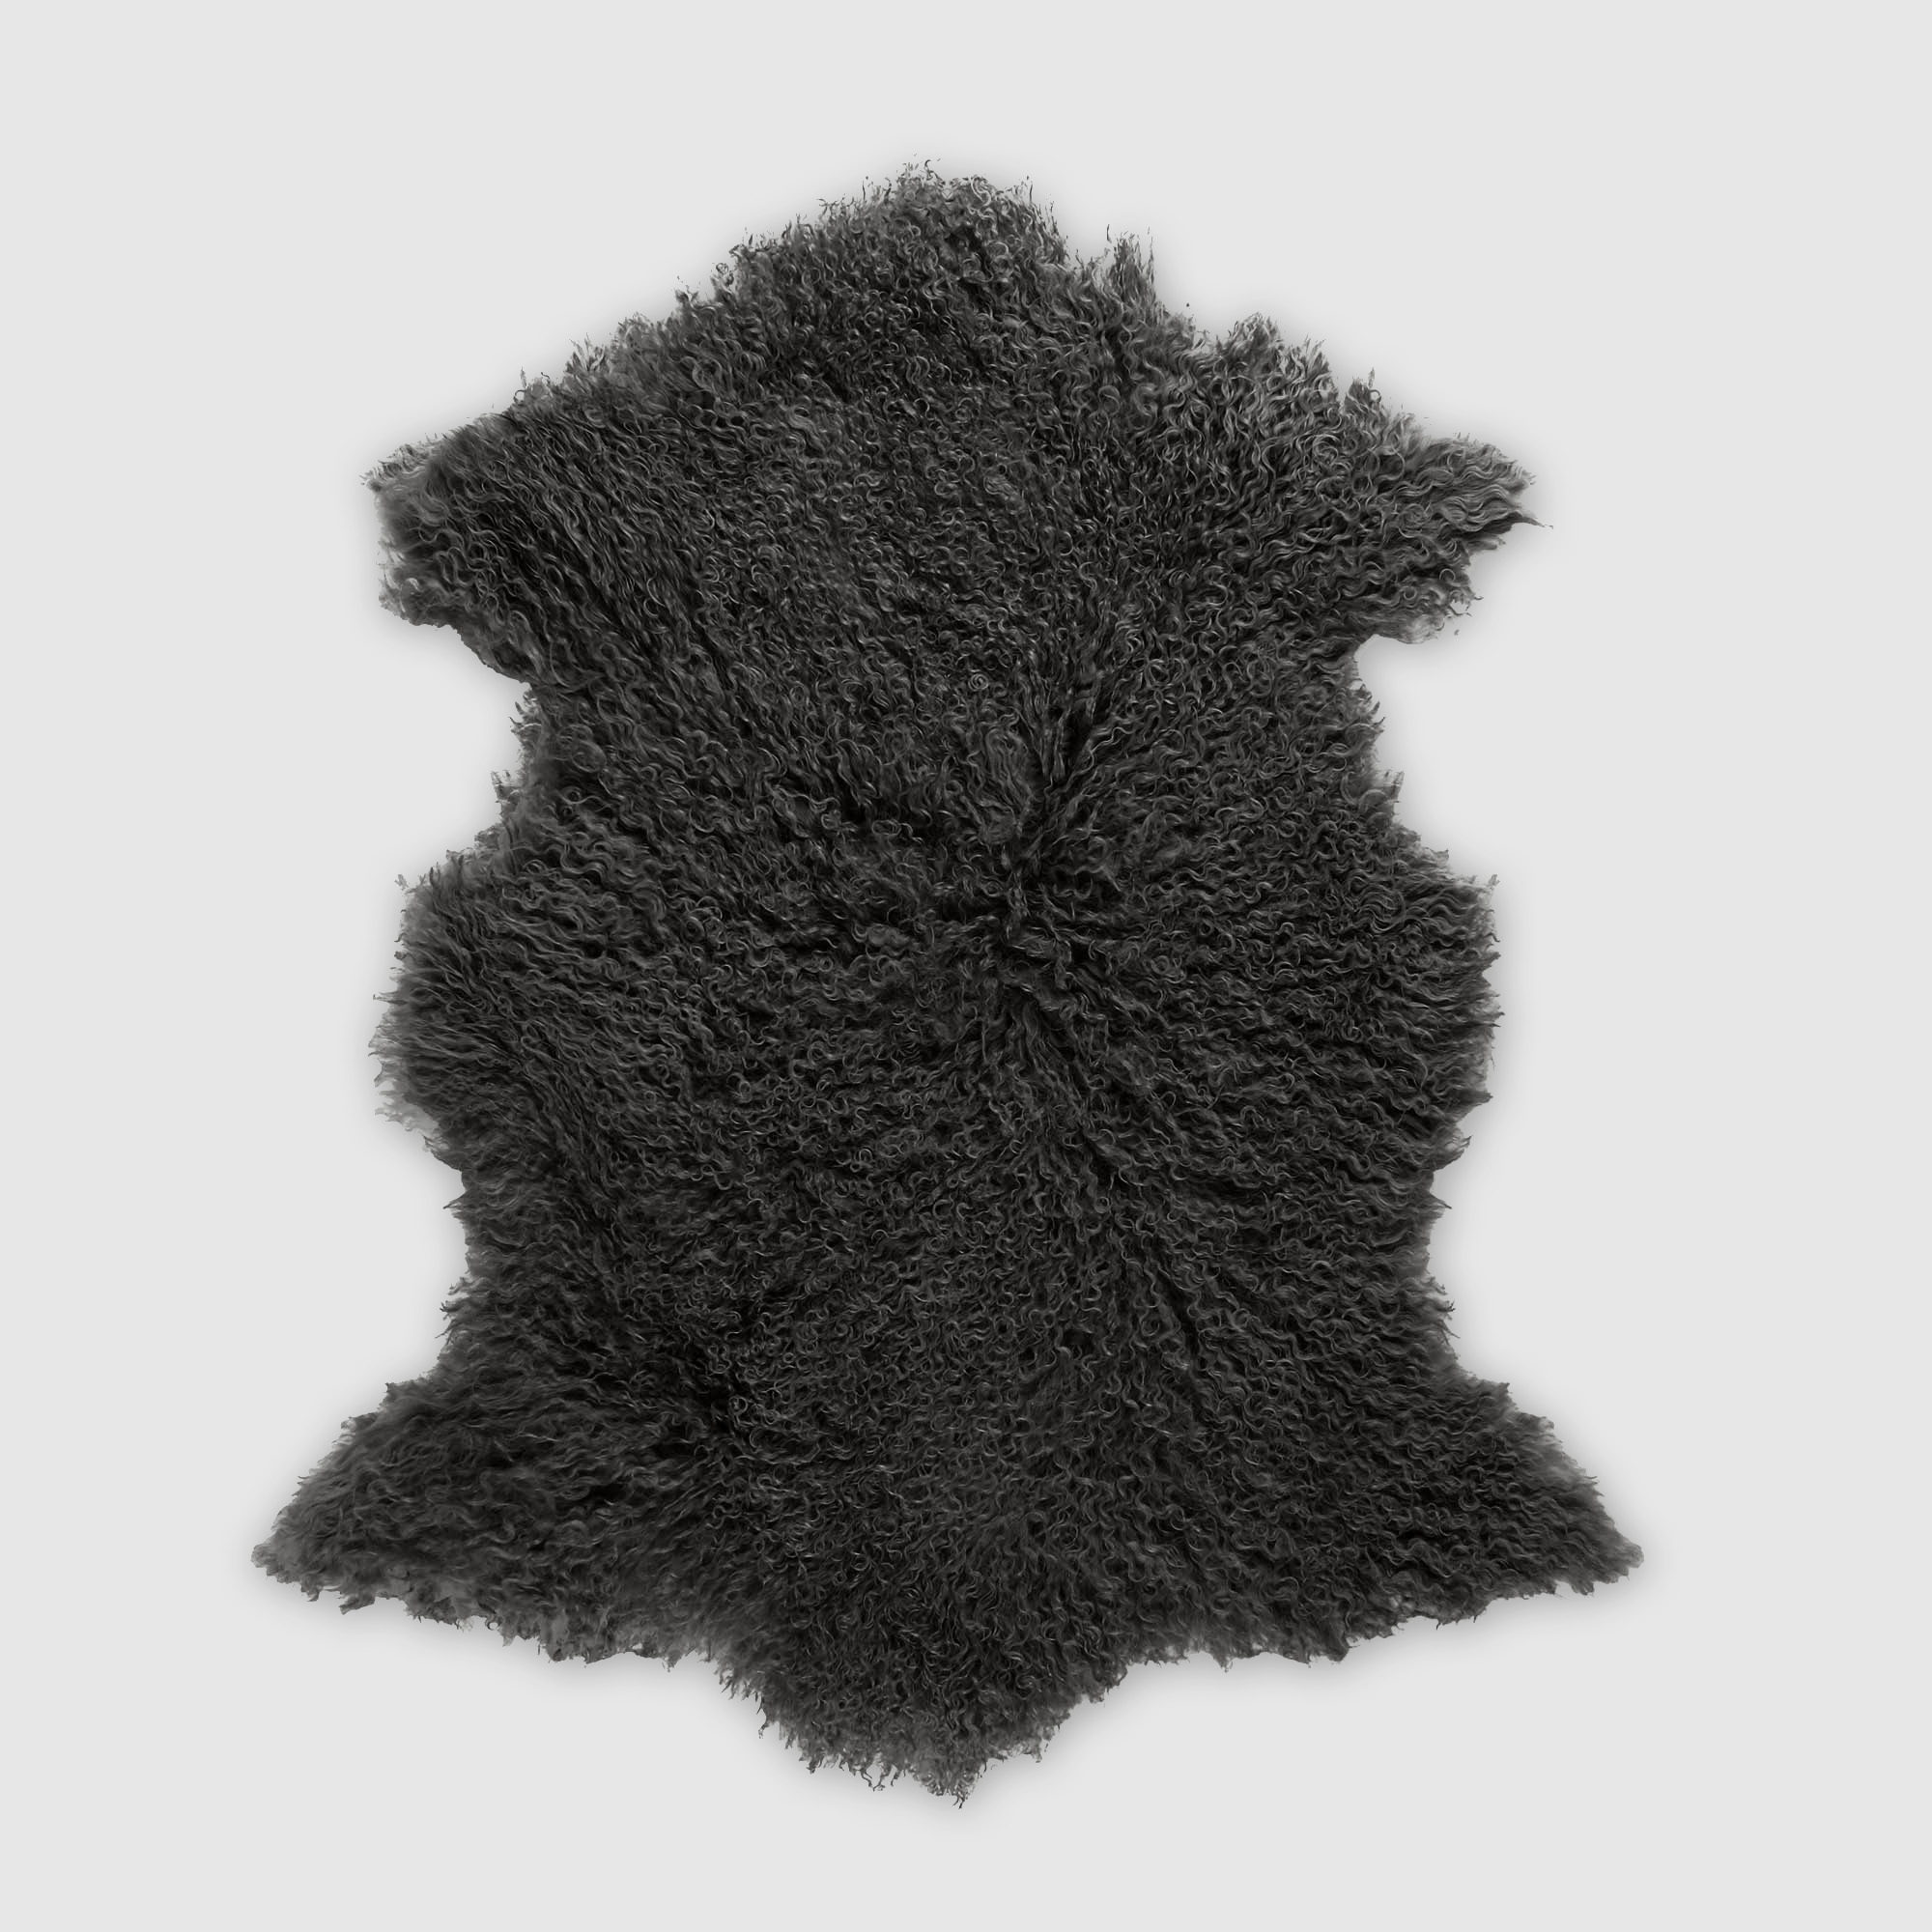 Коврик Henan Prosper charcoal 90 см ворс 80 мм, цвет темно-серый